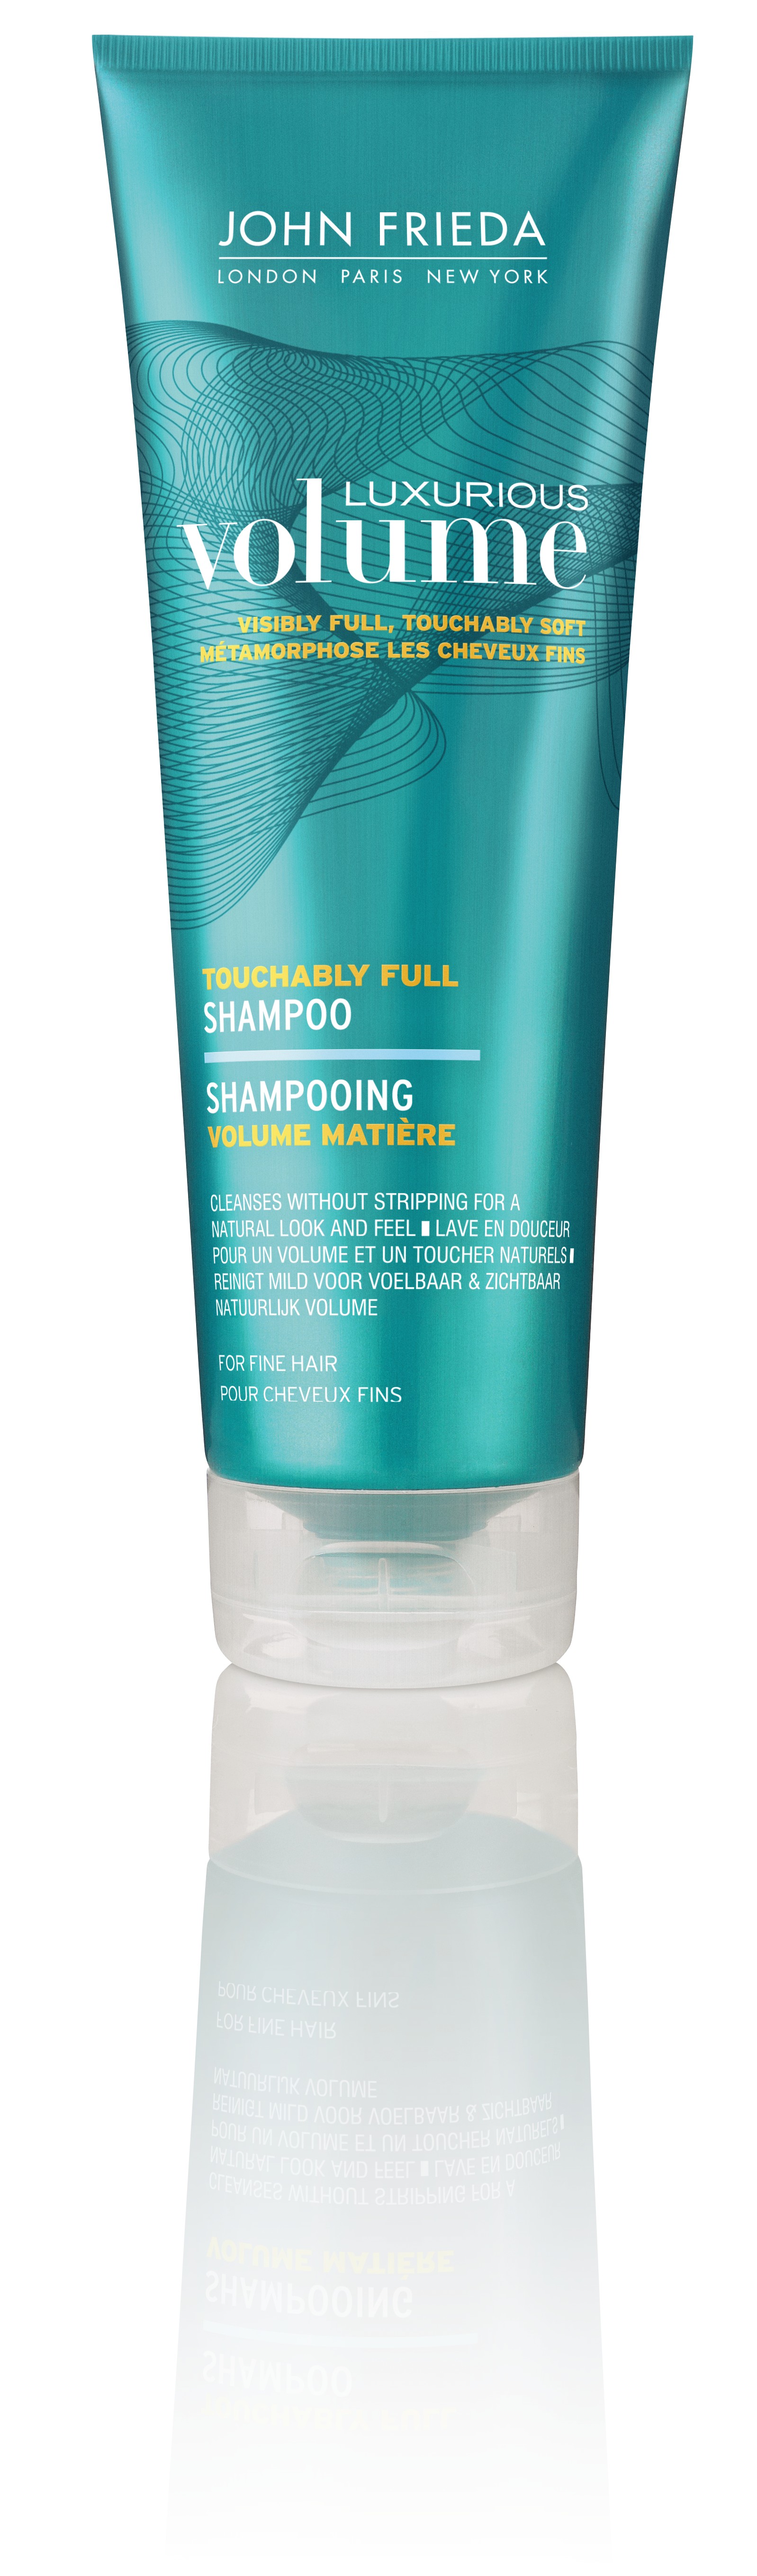 John Frieda Luxurious Volume Touchably Full Shampoo 250ml